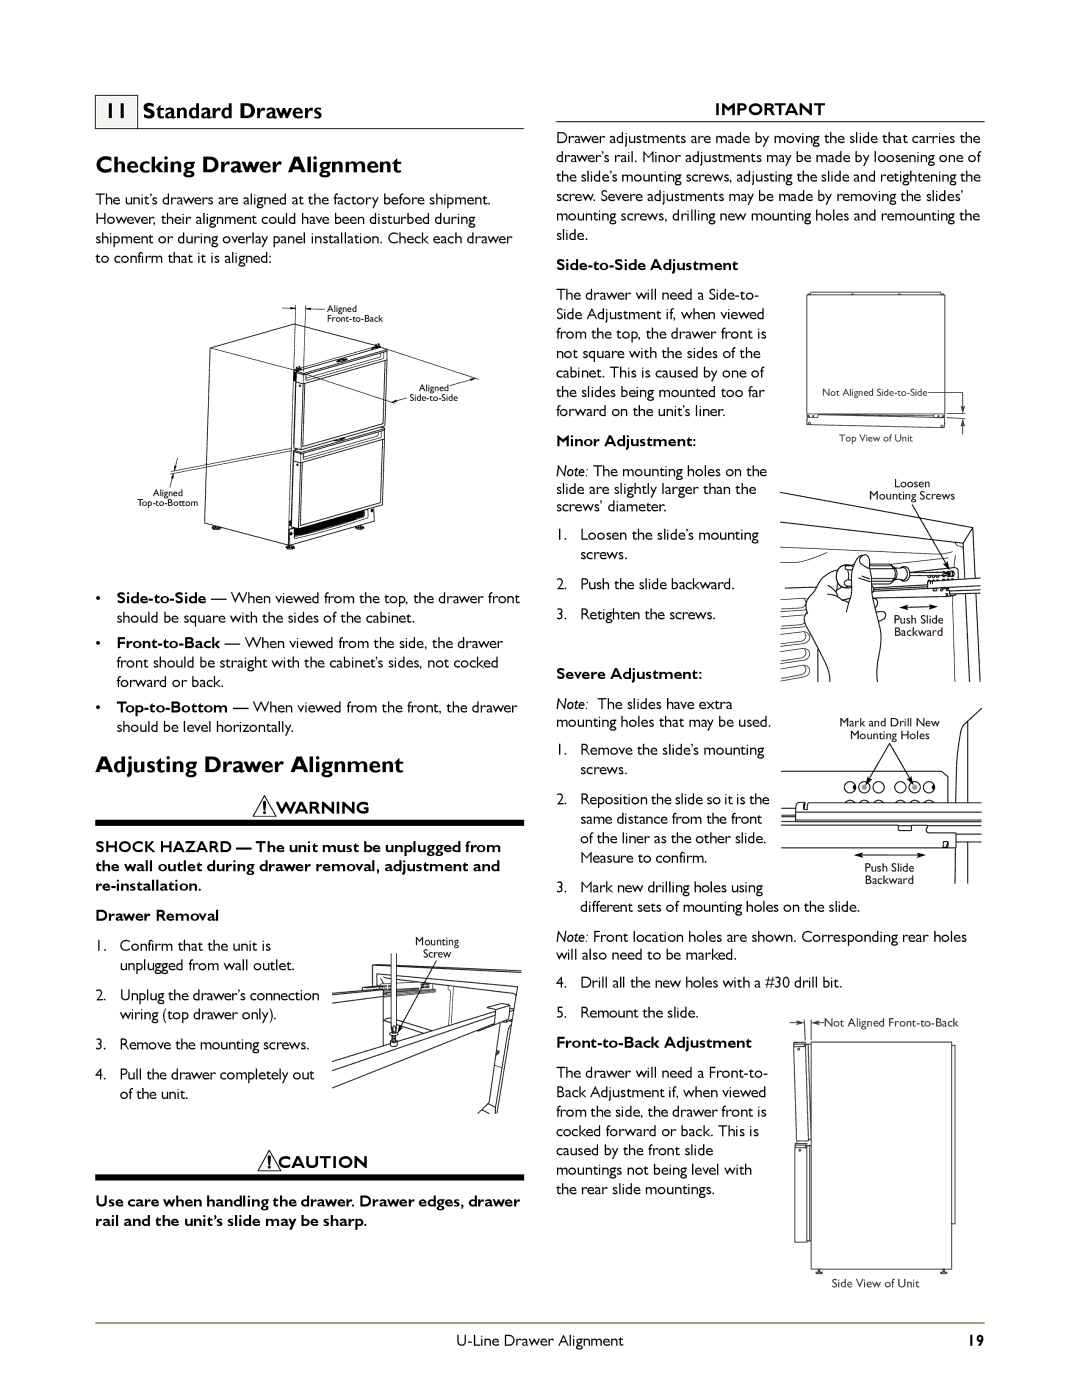 U-Line CO2175FF, C2275DWR, 2175RF manual Checking Drawer Alignment, Adjusting Drawer Alignment 